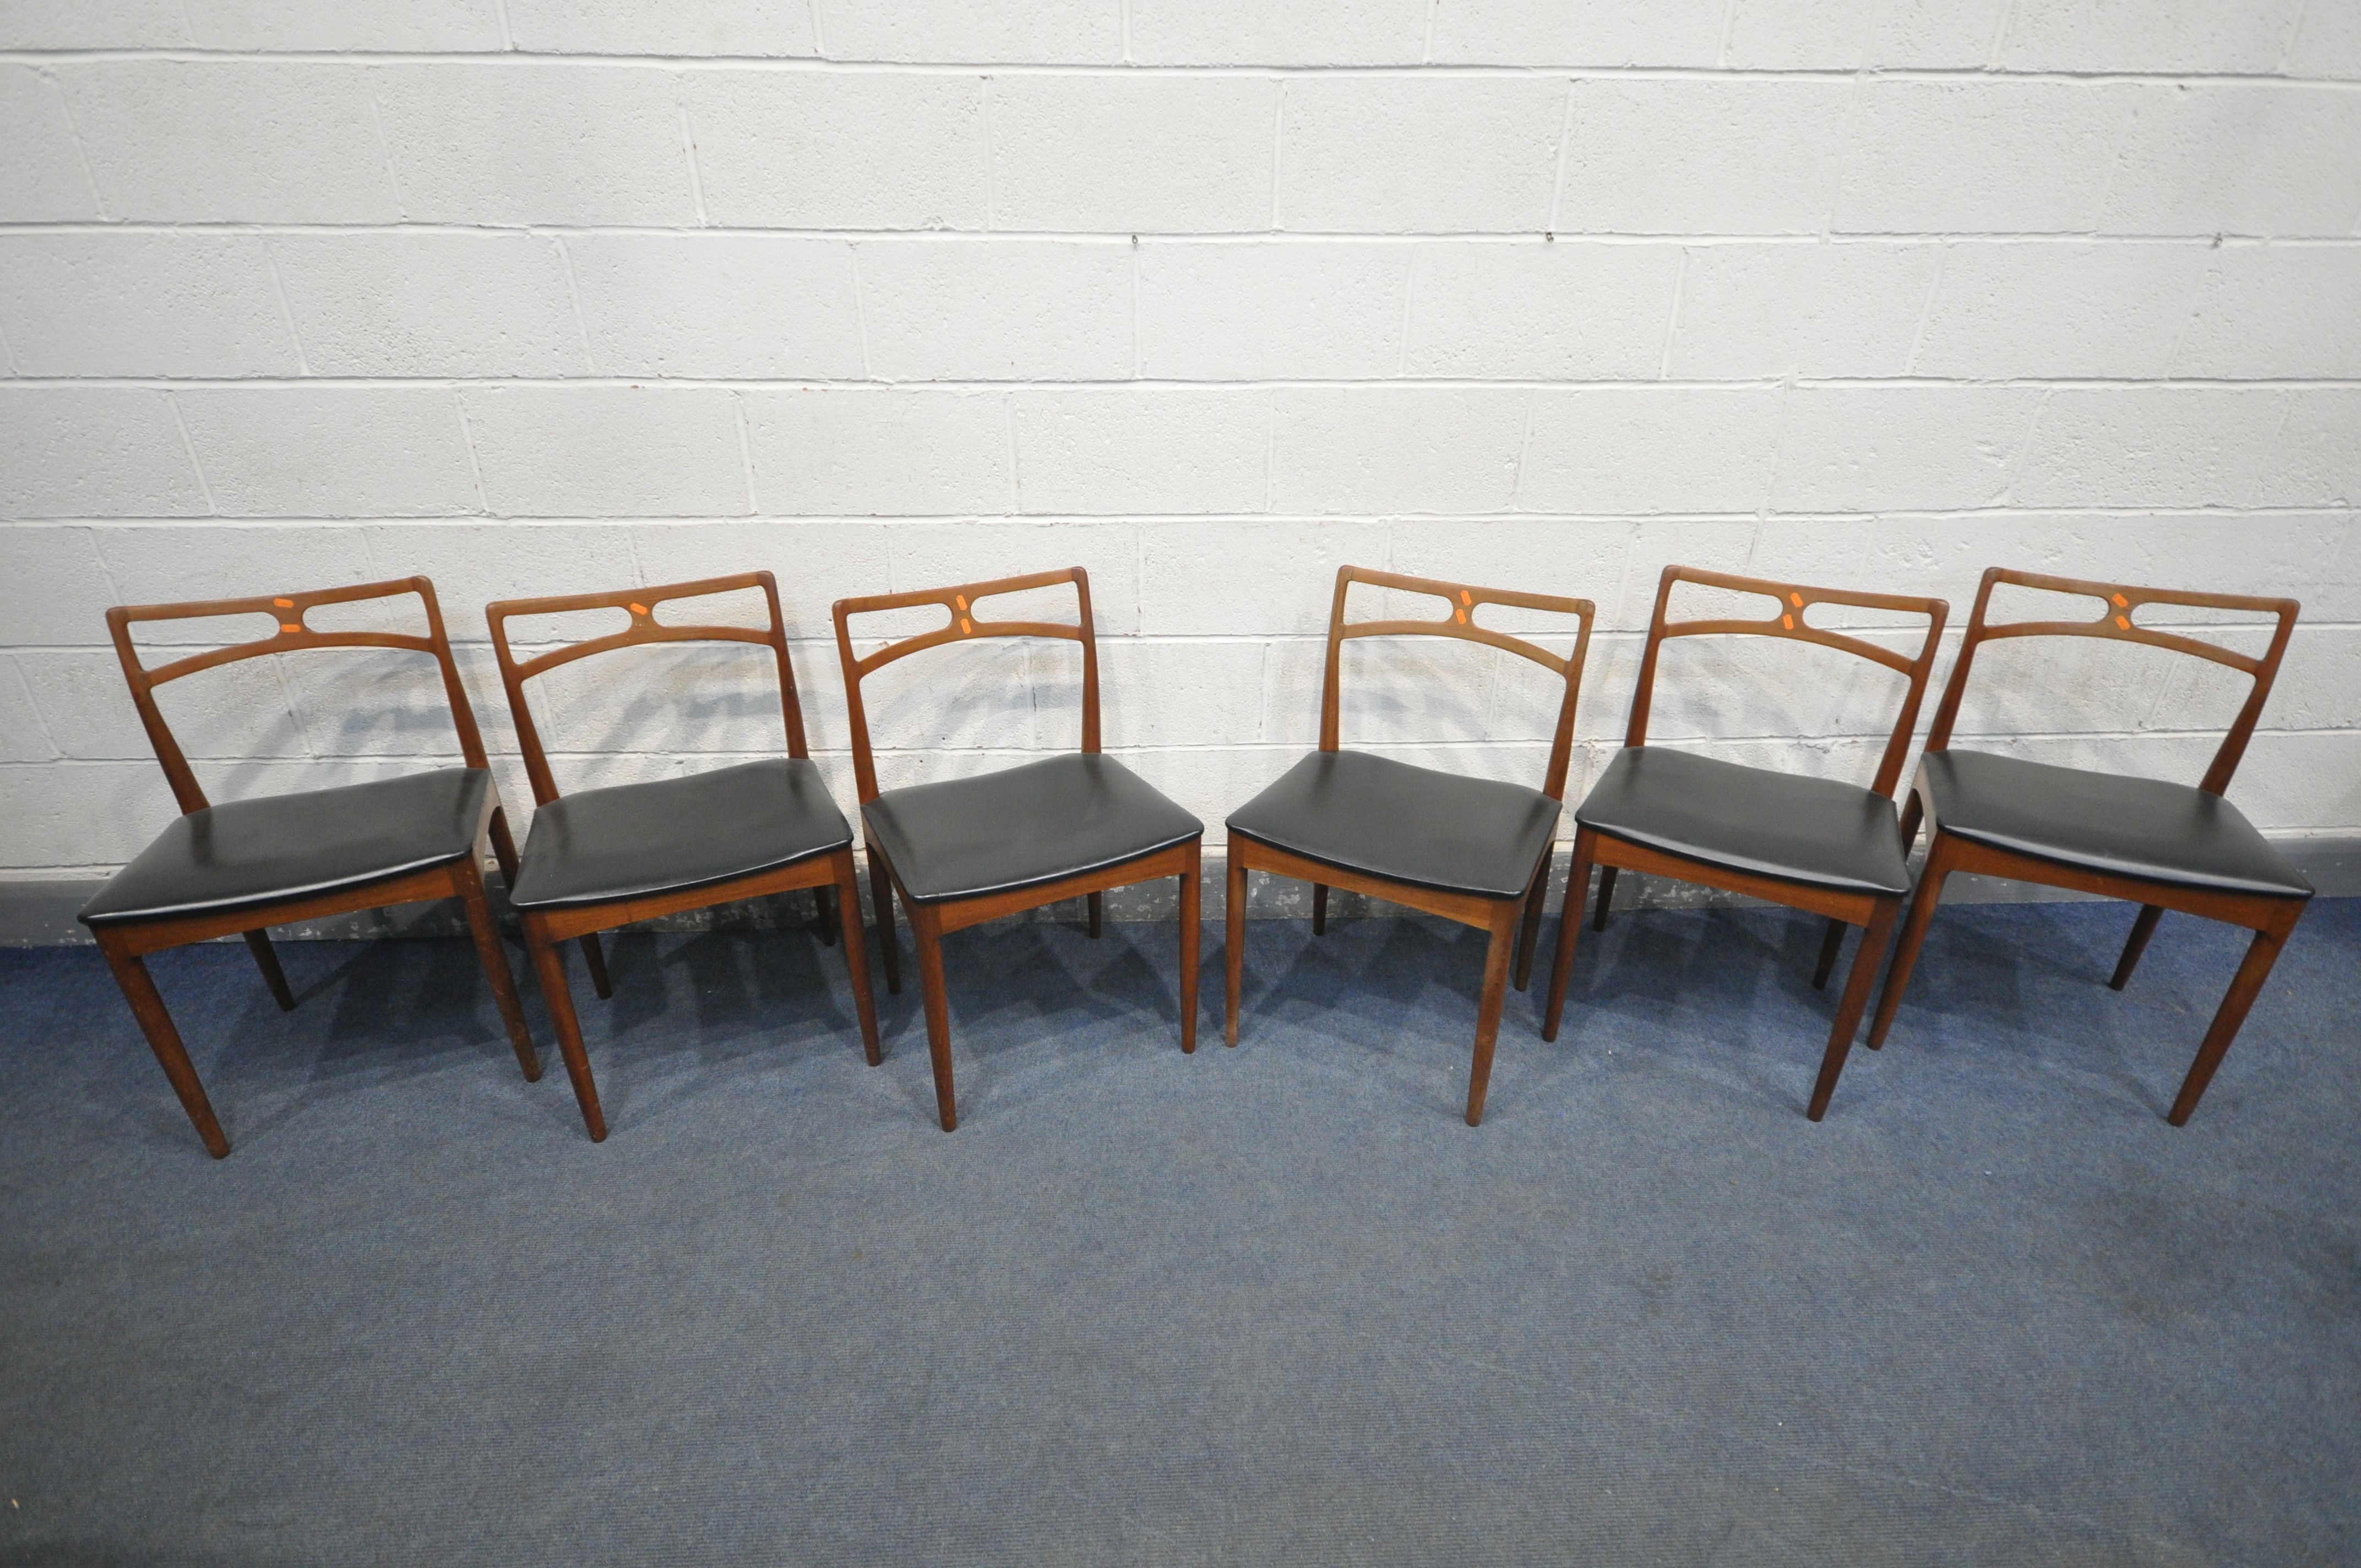 JOHANNES ANDERSEN FOR CHRISTIAN LINNEBERGS MØBELFABRIK, a set of six Danish teak dining chairs, with